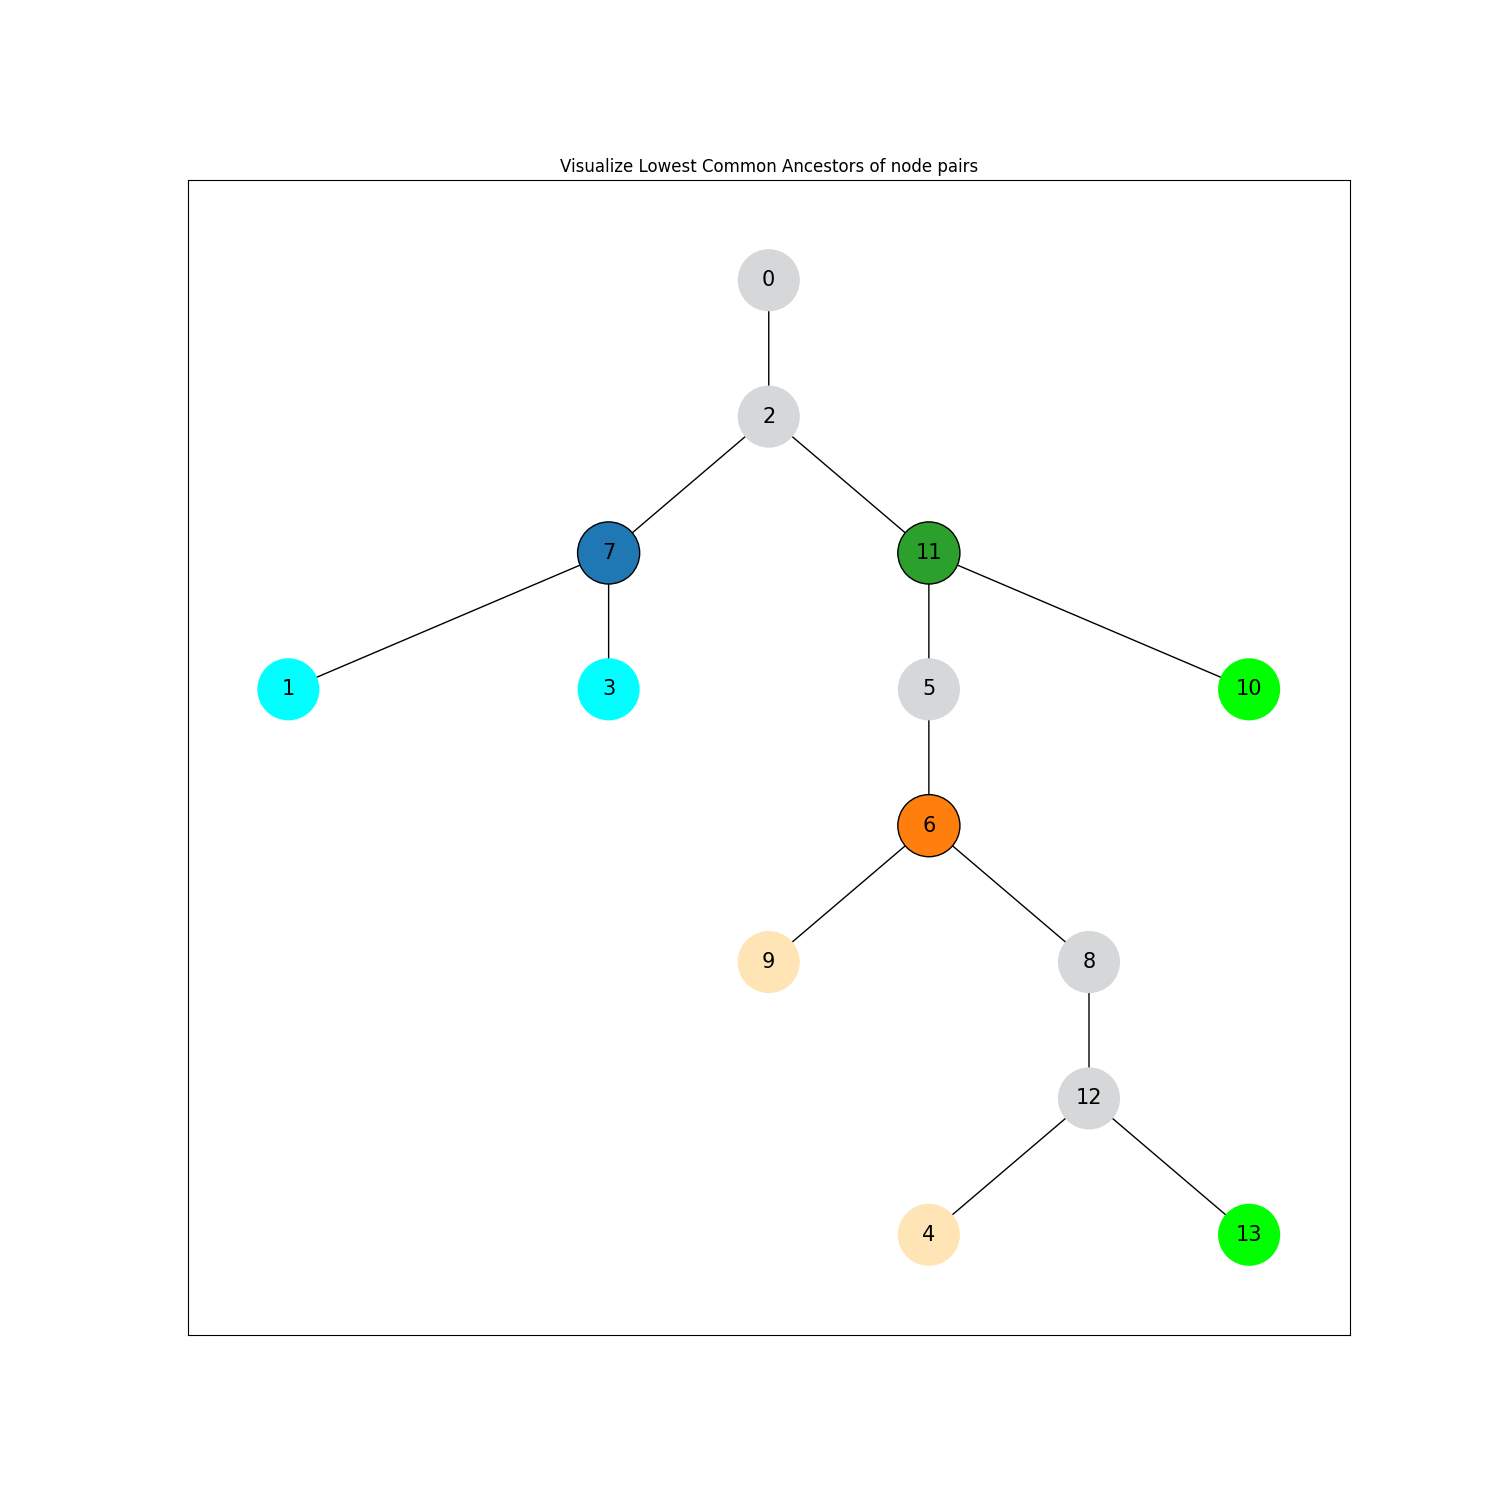 Visualize Lowest Common Ancestors of node pairs